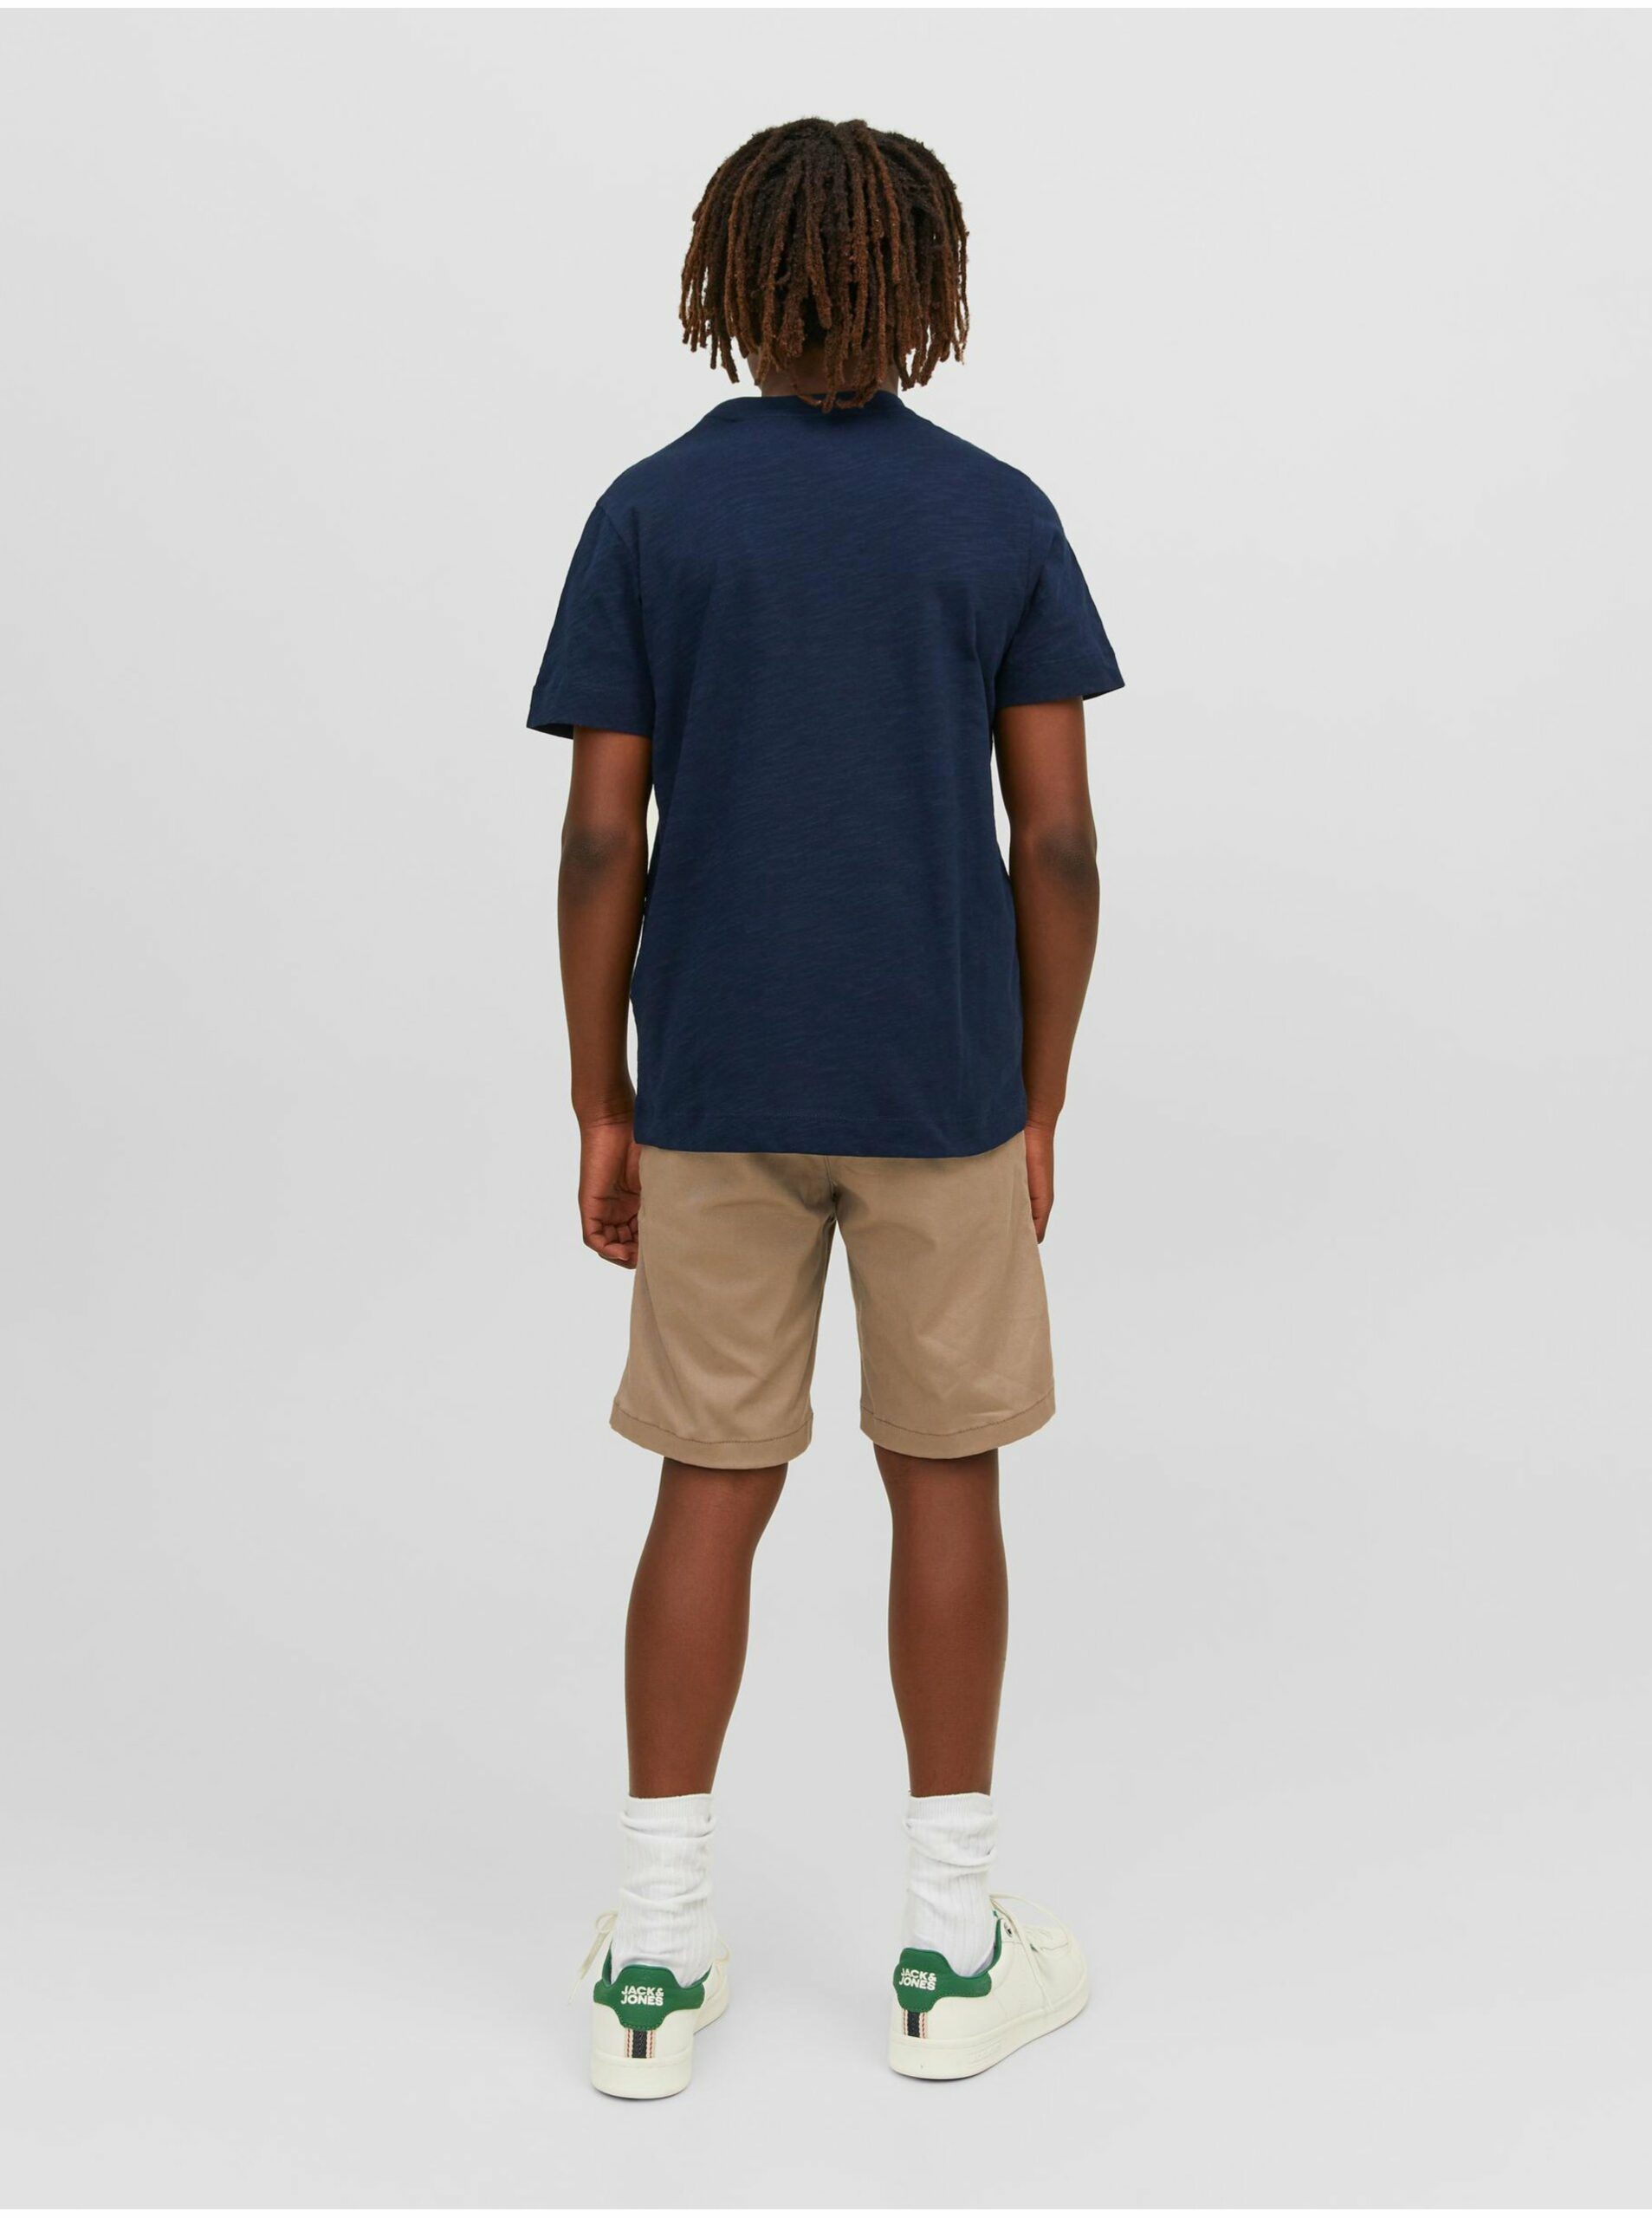 Tmavomodré chlapčenské tričko Jack & Jones Tulum